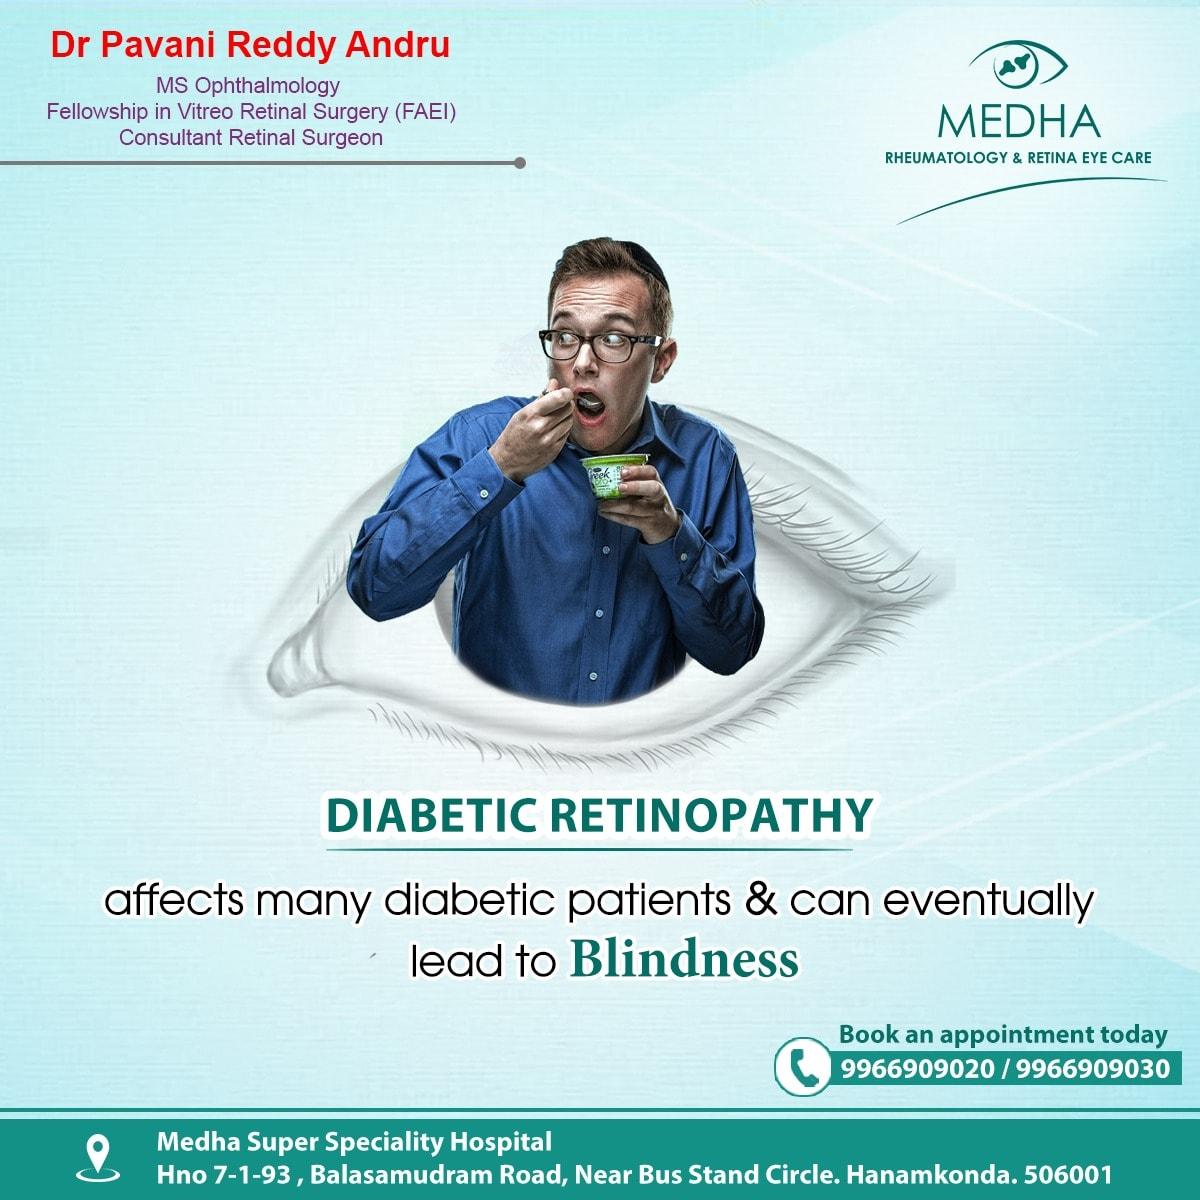 People with Diabetes can have an Eye Disease called Diabetic Retinopathy